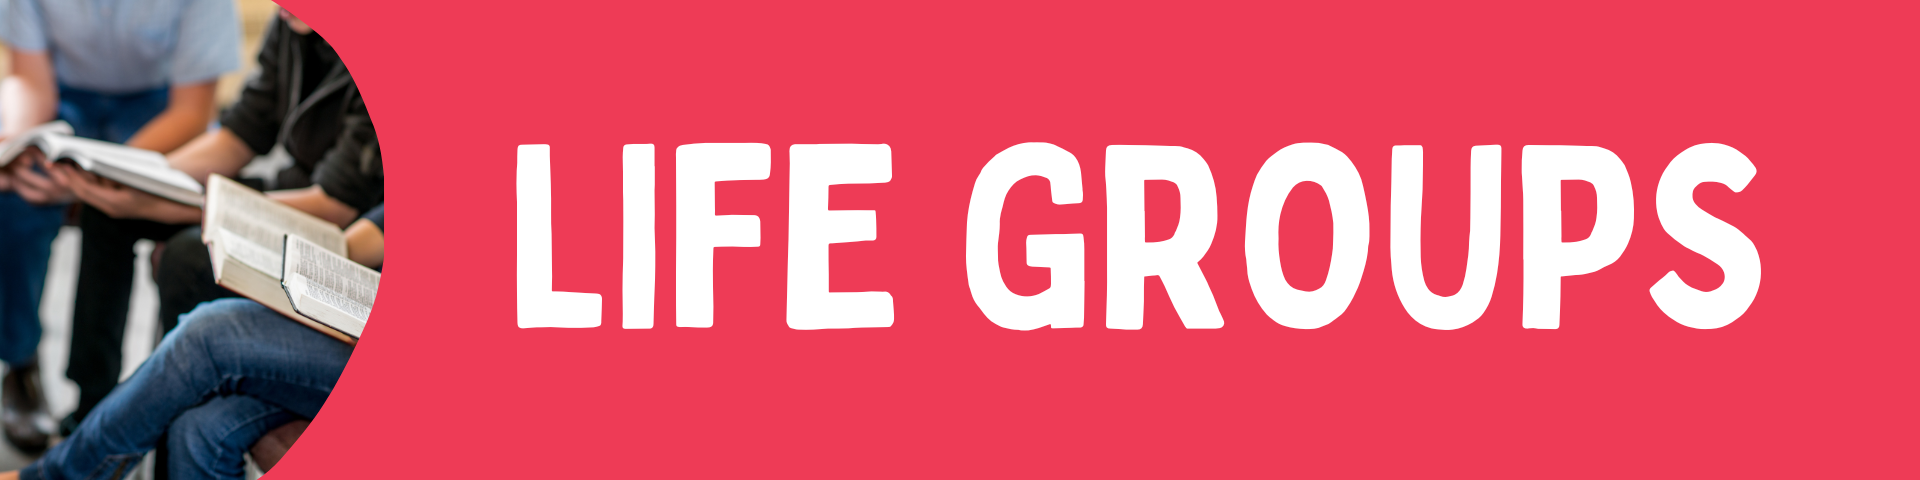 metairie-LIFE GROUPS-website